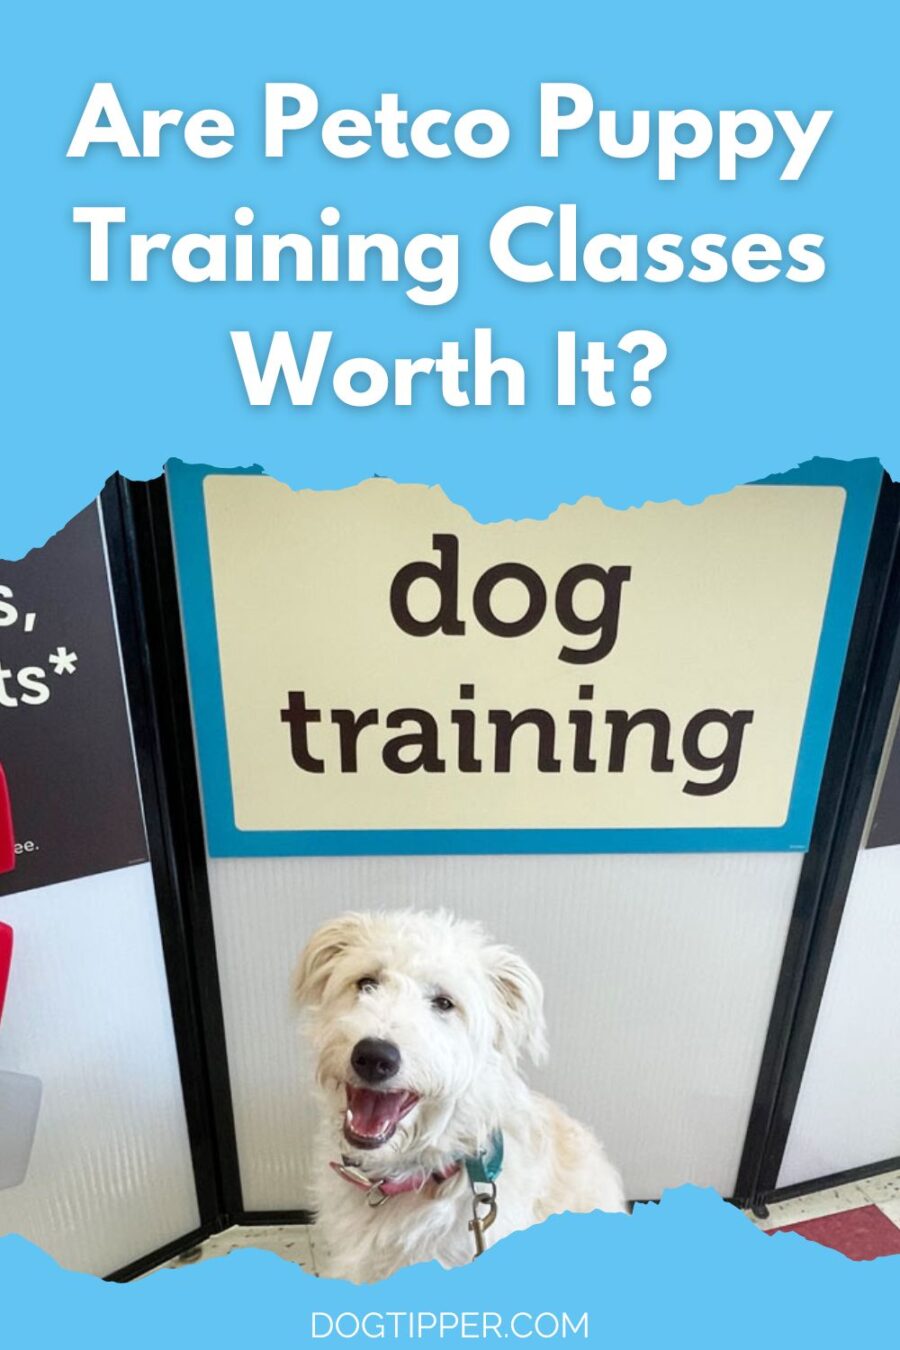 Are Petco Puppy Training Classes Worth It?